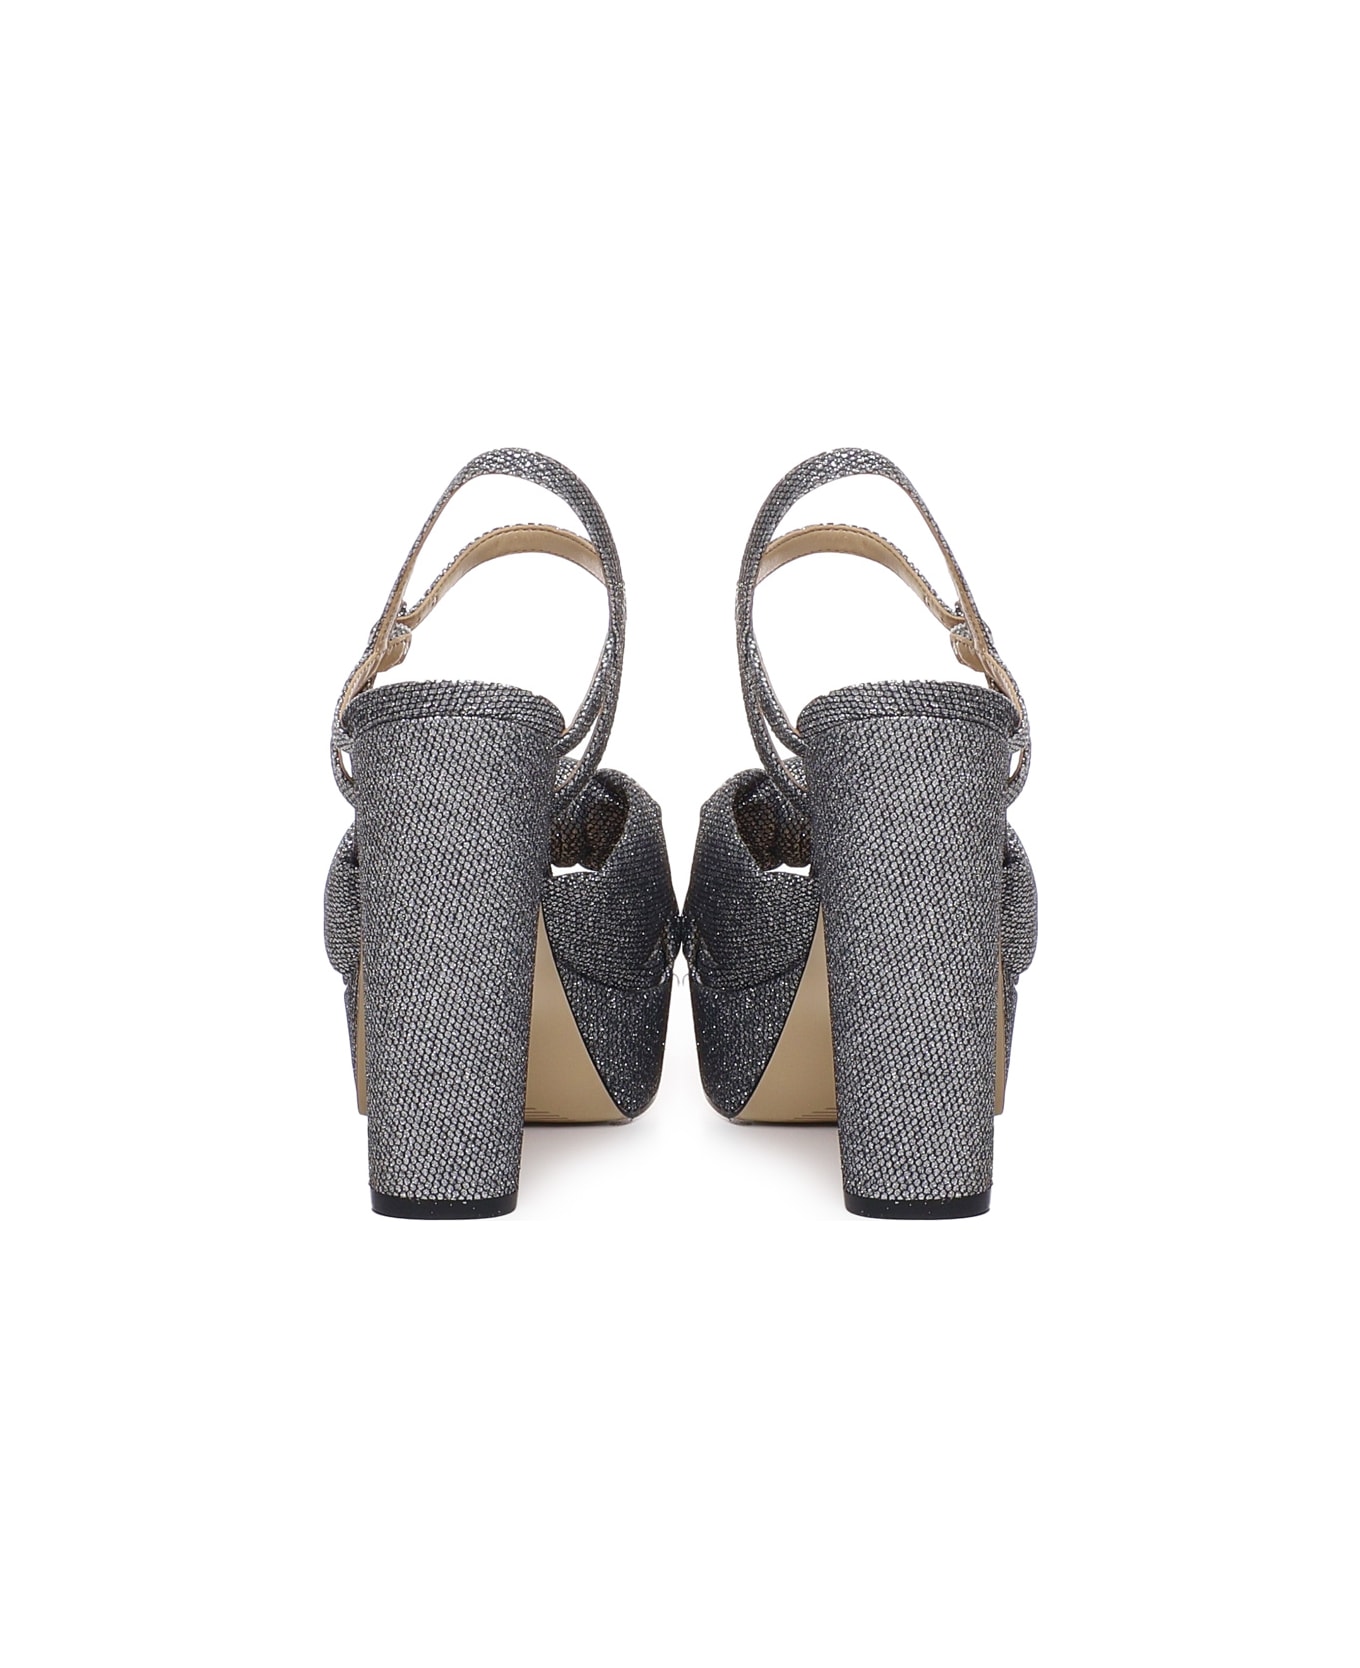 Michael Kors Josie Platform Sandals - Silver